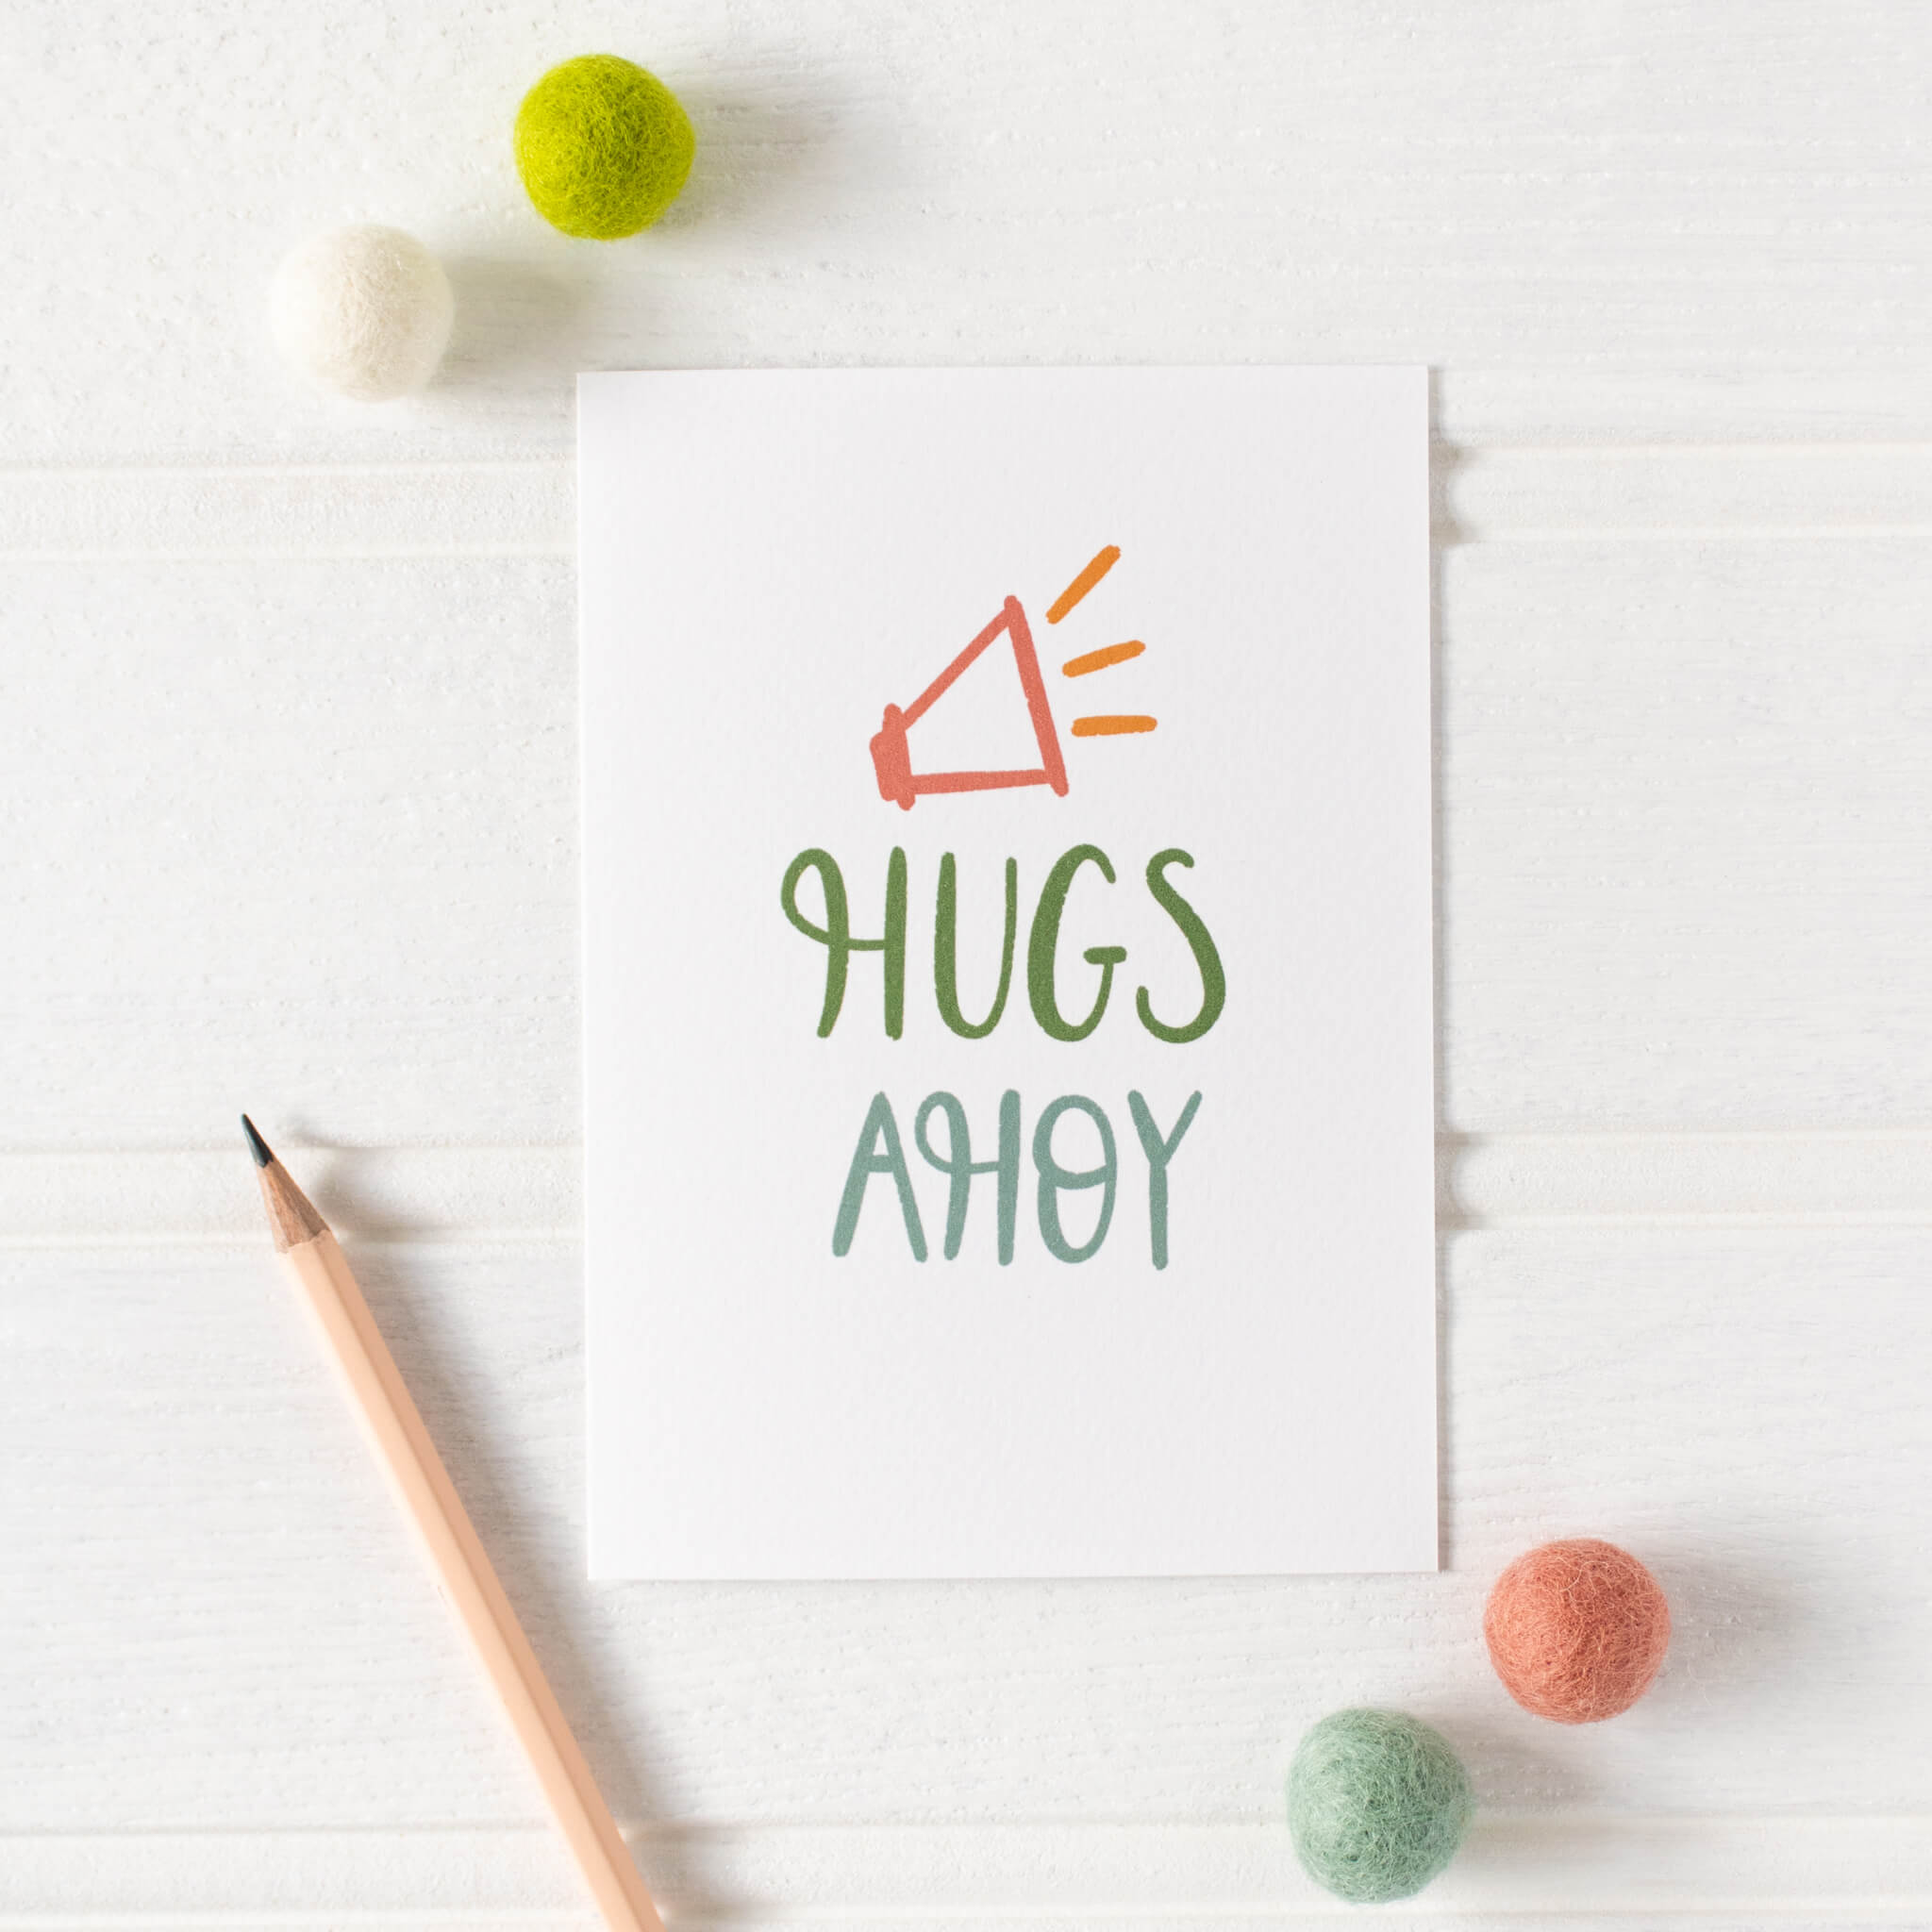 Hugs Ahoy encouragement card